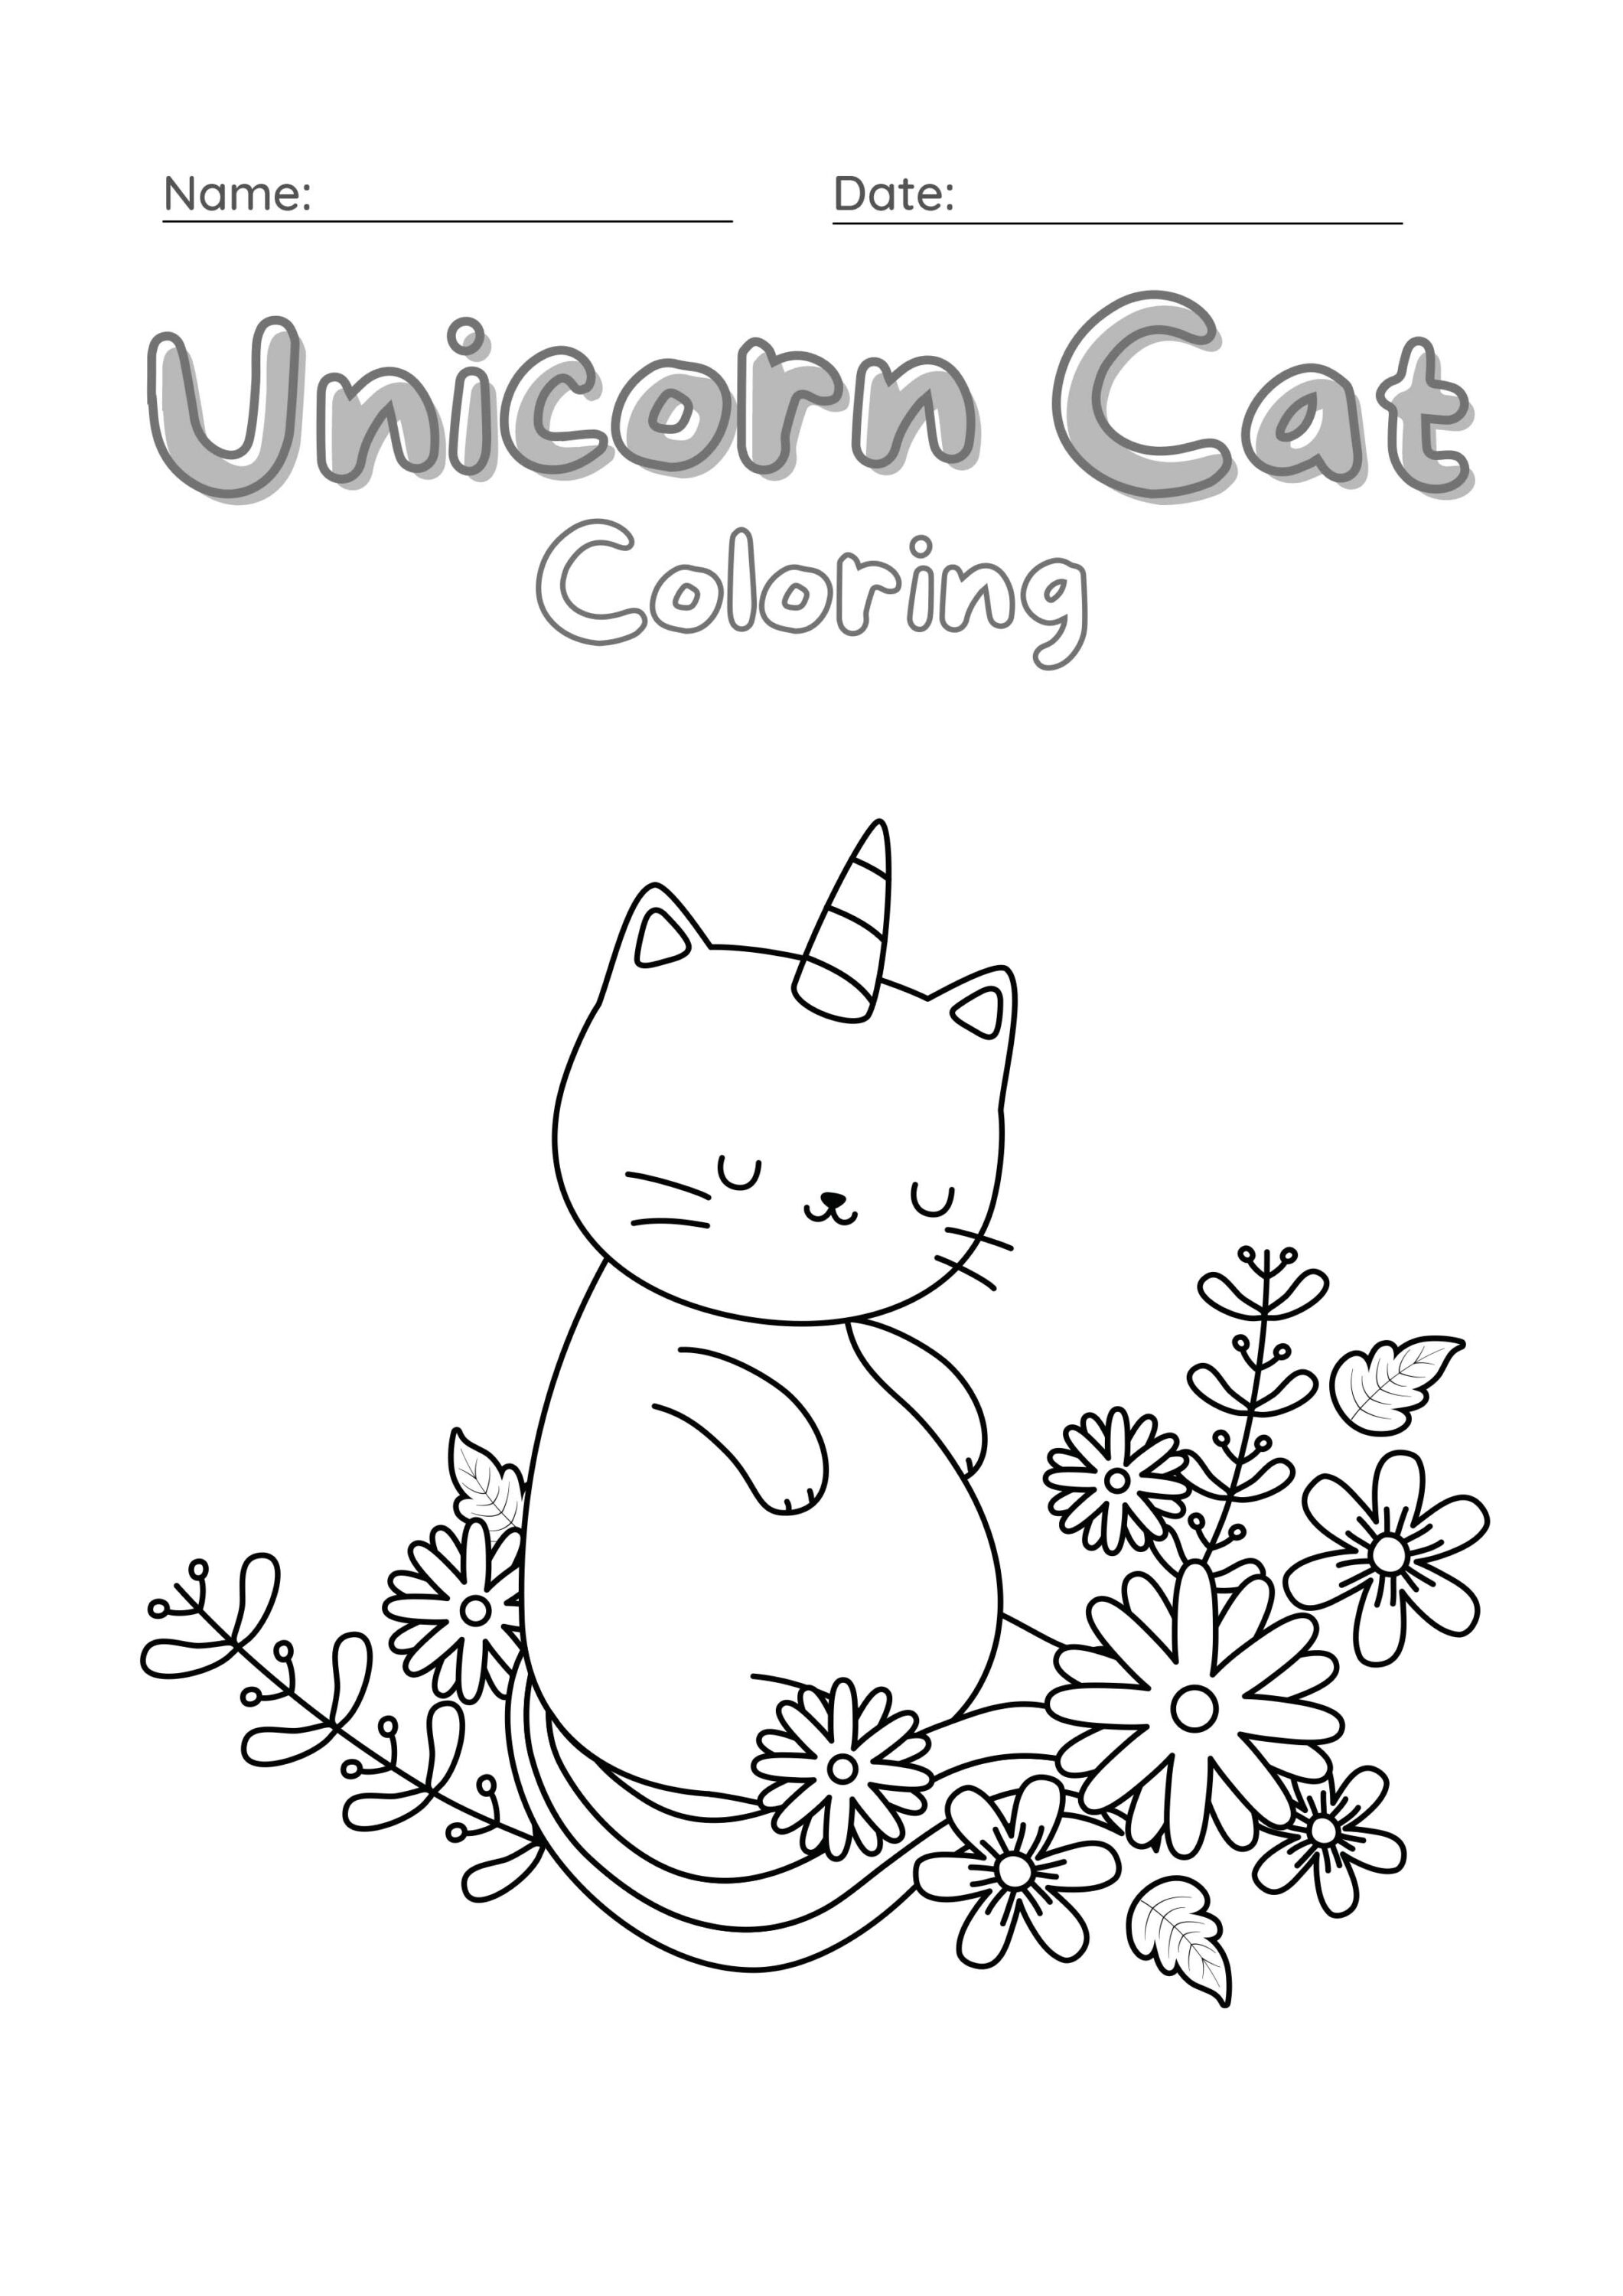 Unicorn Cat Coloring Worksheet Set 15